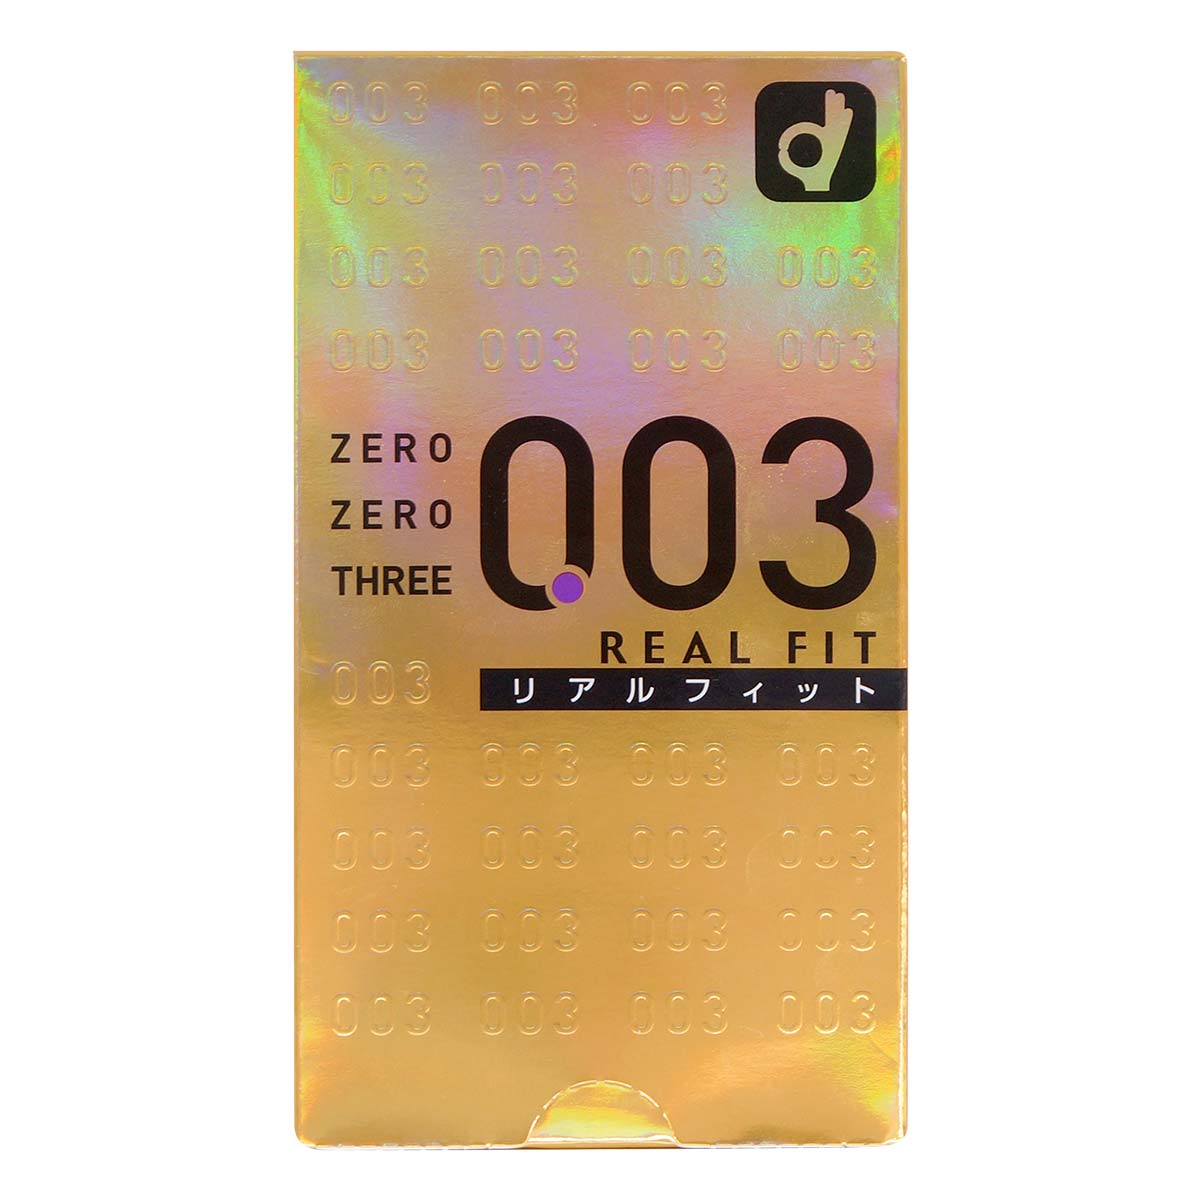 Zero Zero Three 0.03 Real Fit (Japan Edition) 10's Pack Latex Condom-thumb_2